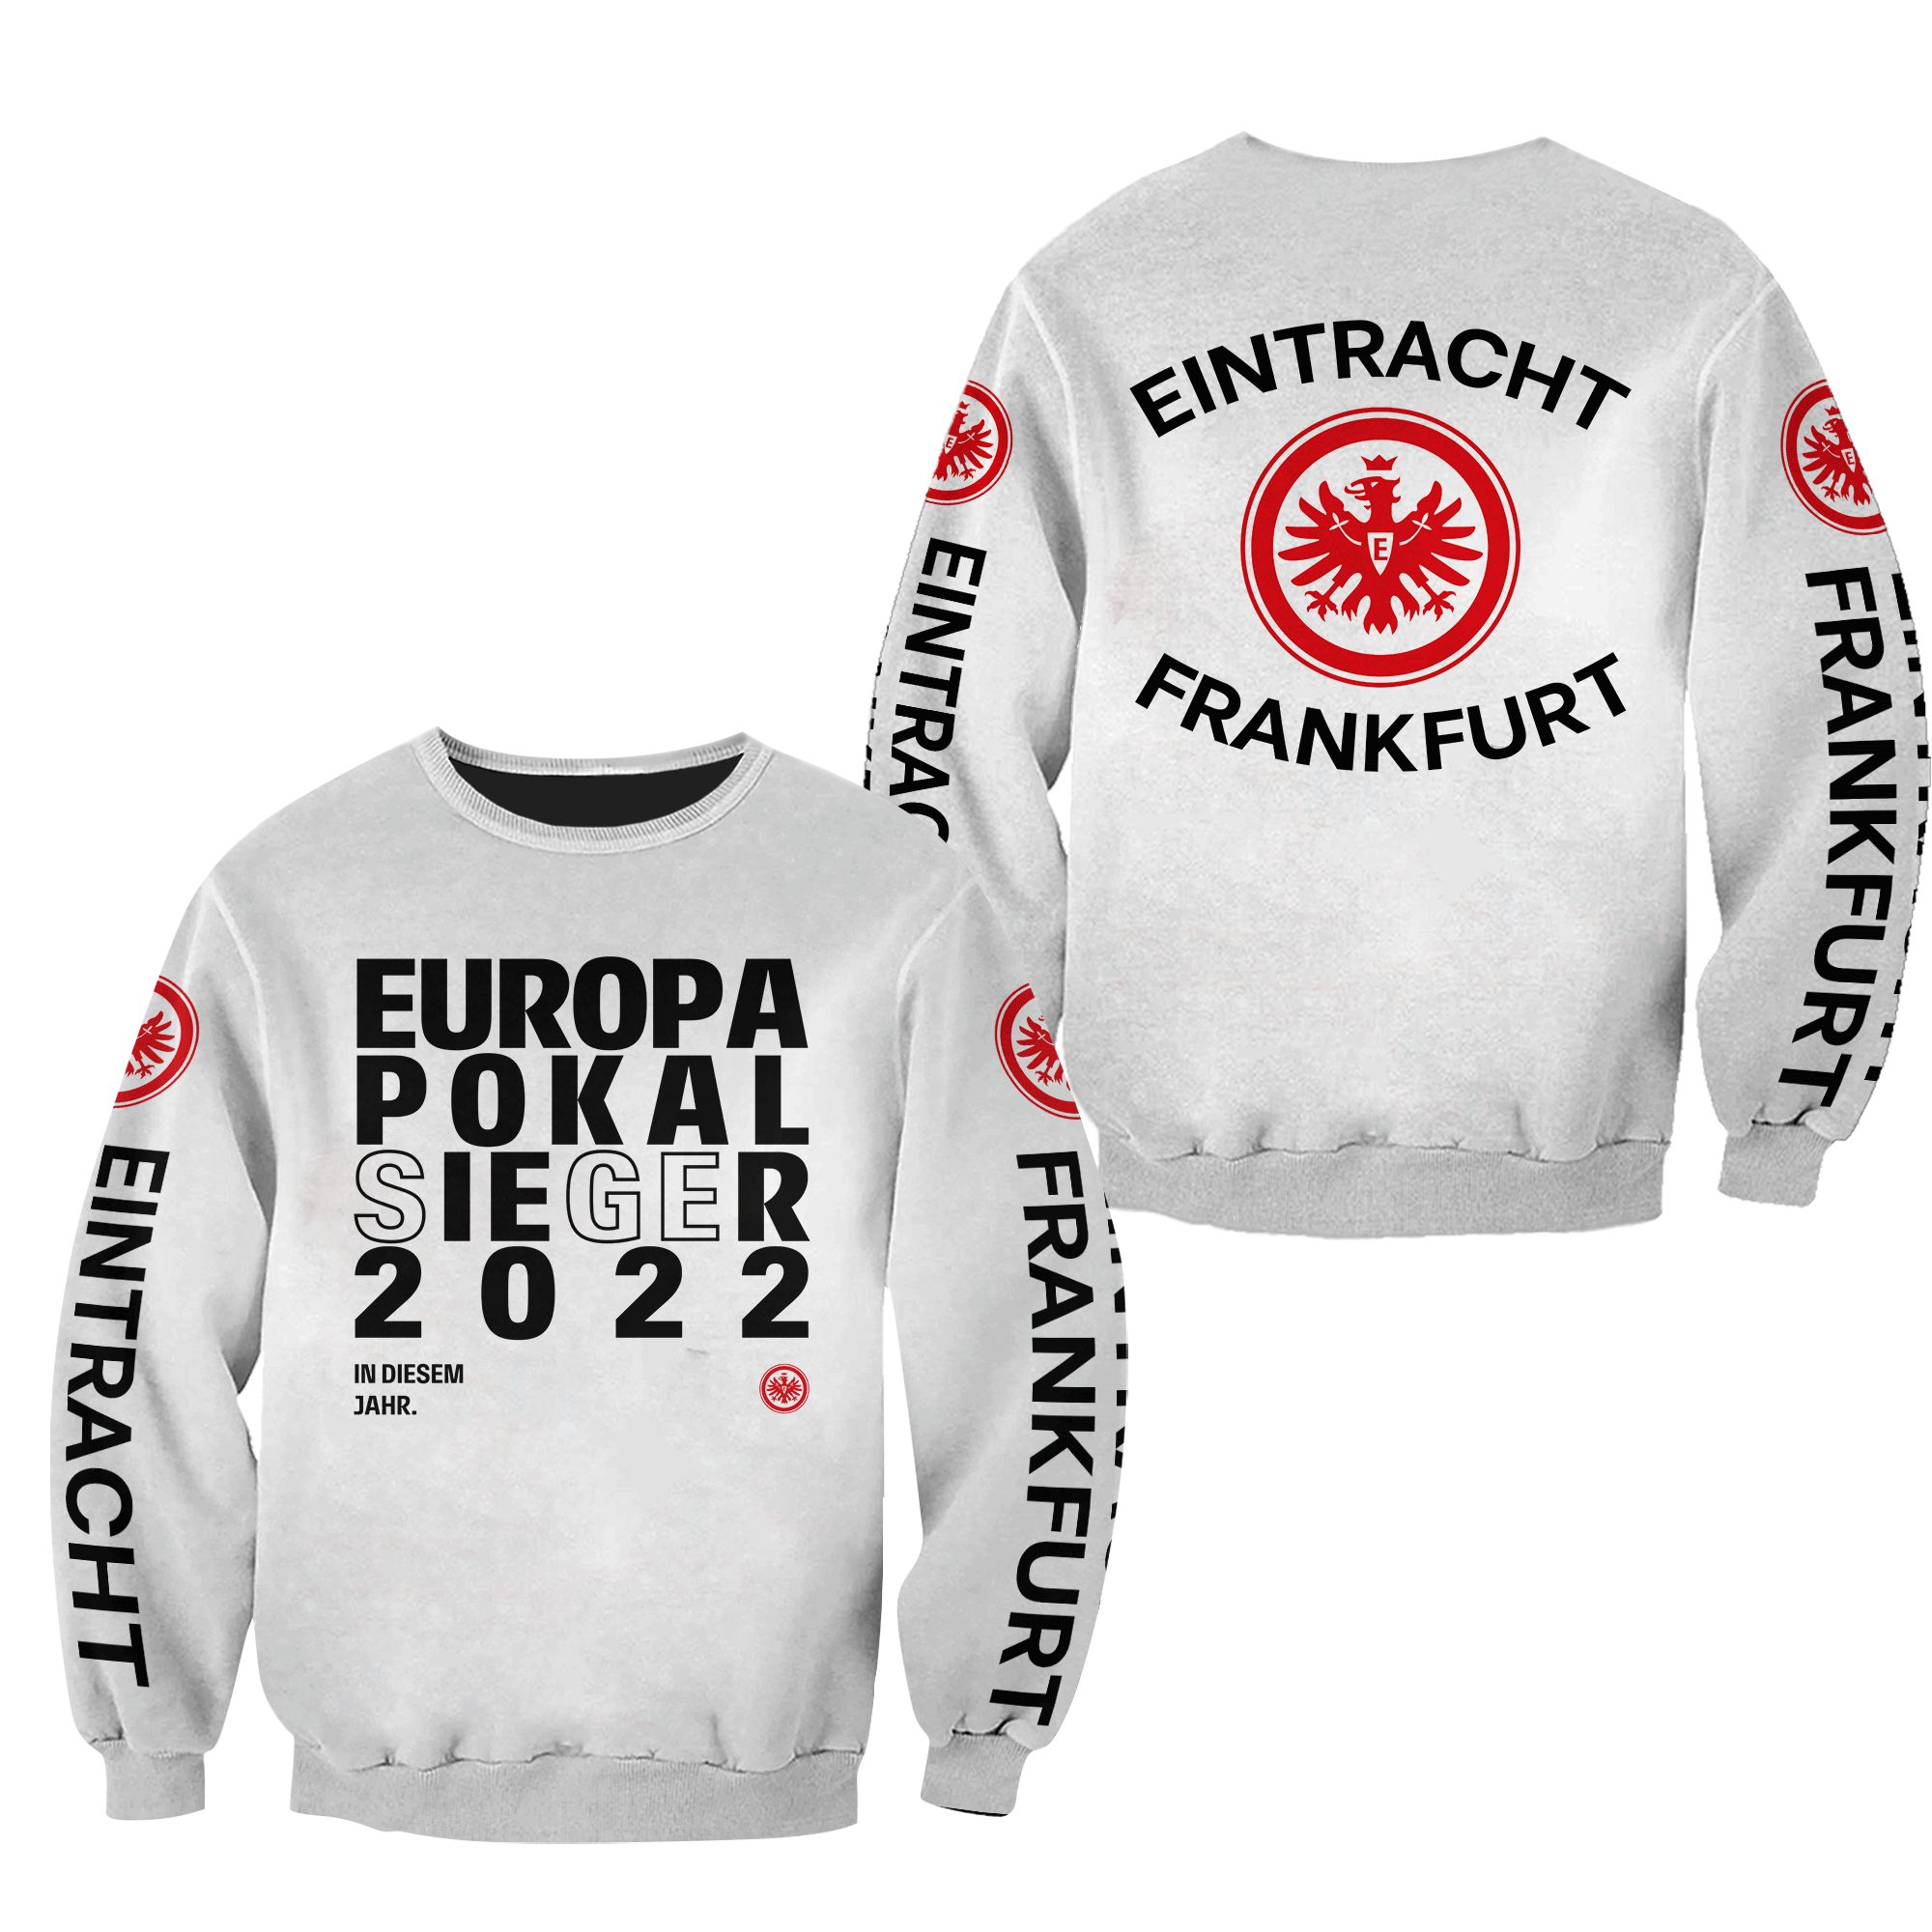 HOT Eintracht Frankfurt Europapokal Sieger 2022 White 3D Print Hoodie, Shirt1